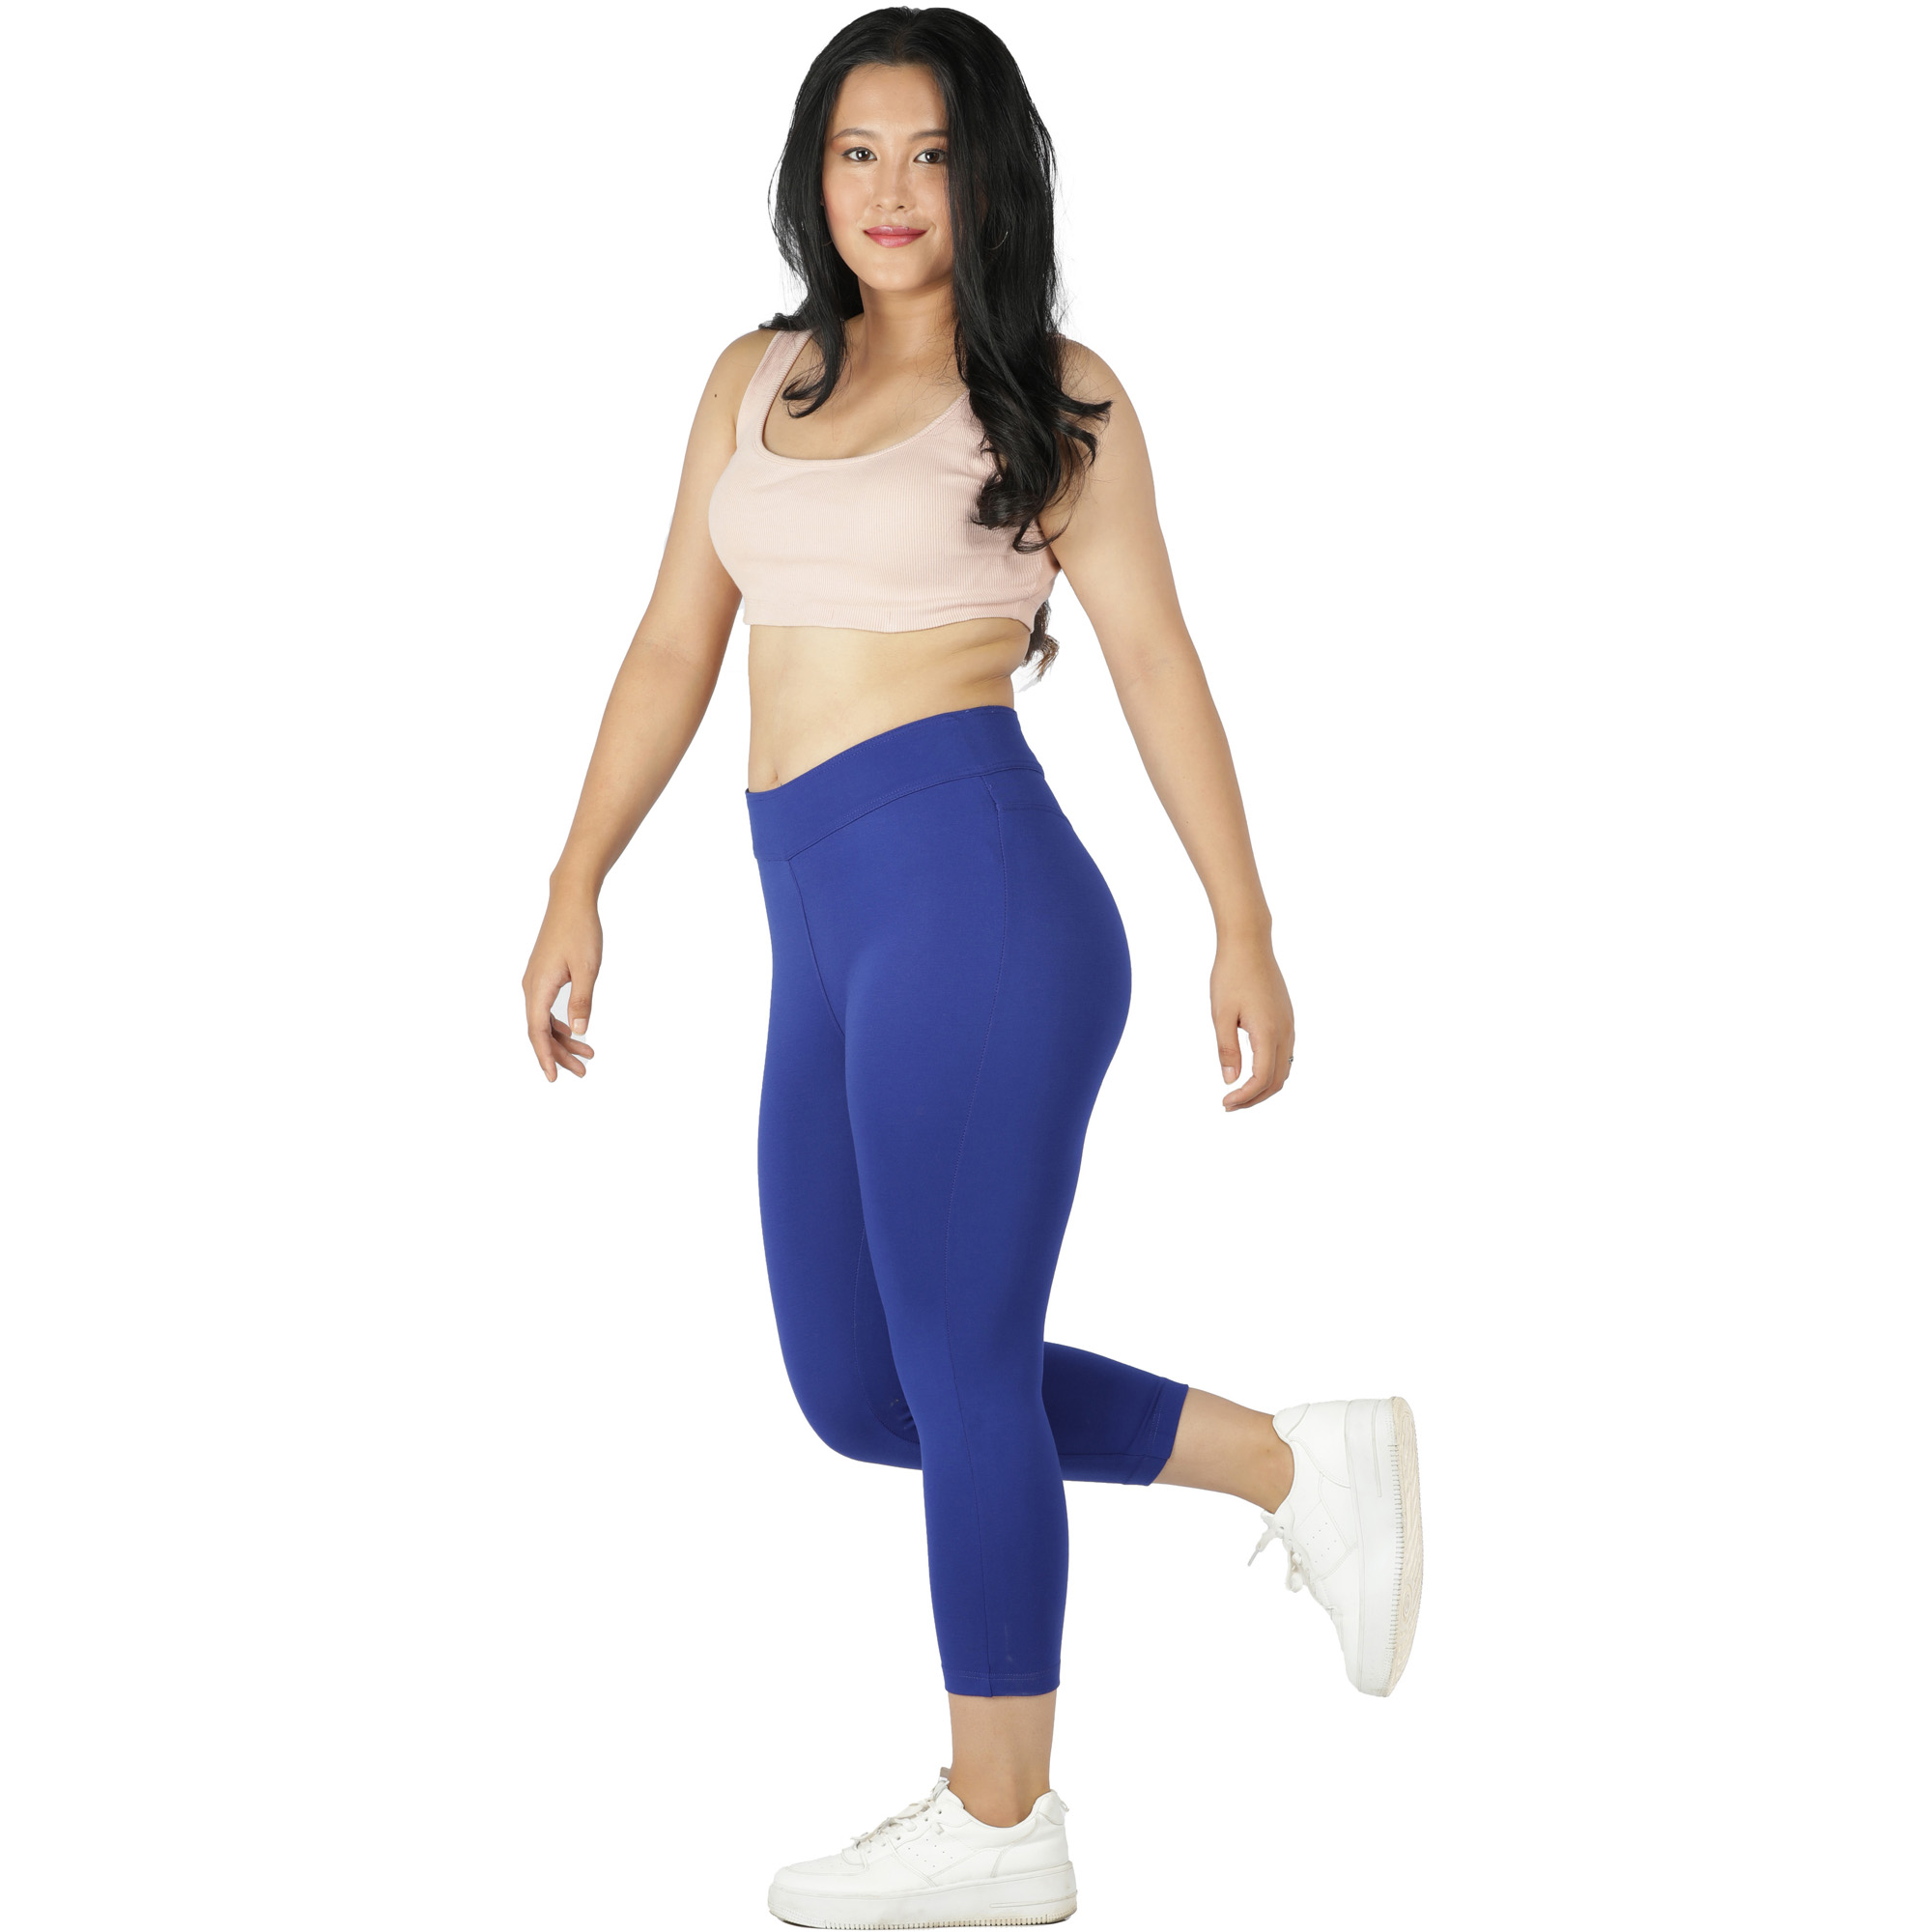 Royal blue capris for women gym wear Low rise - Belore Slims